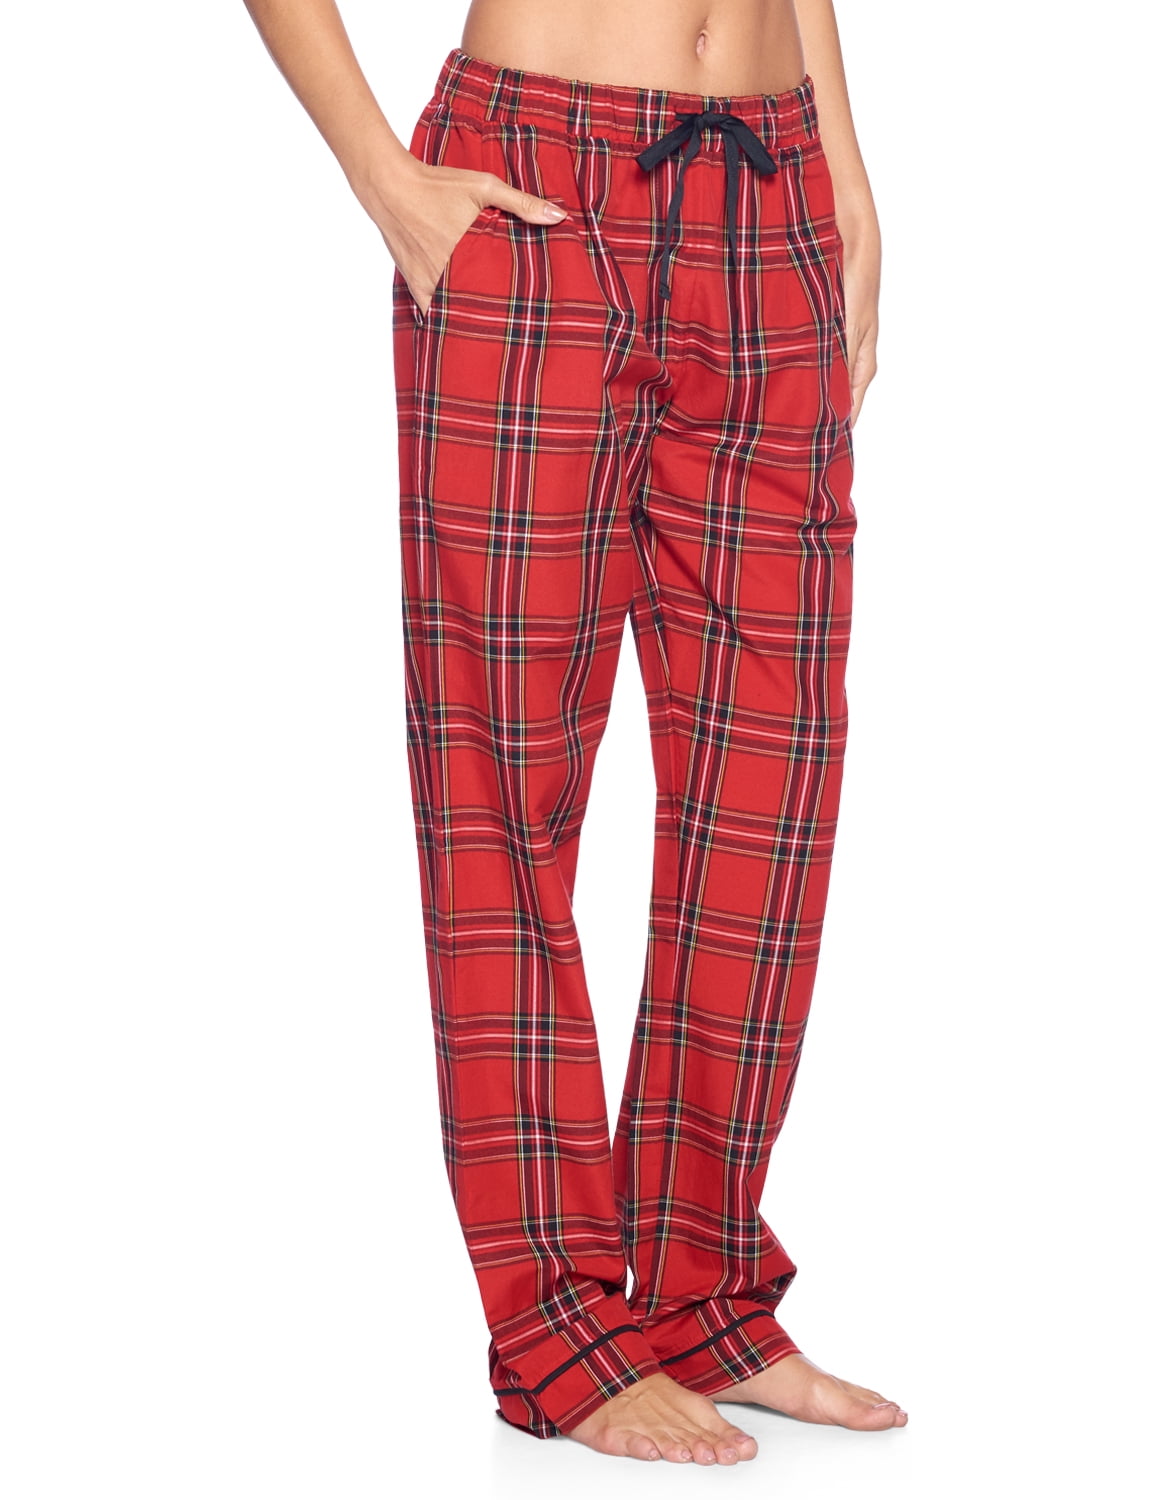 Ashford & Brooks Women's Woven Pajama Sleep Pants, Red/Black Stewart ...